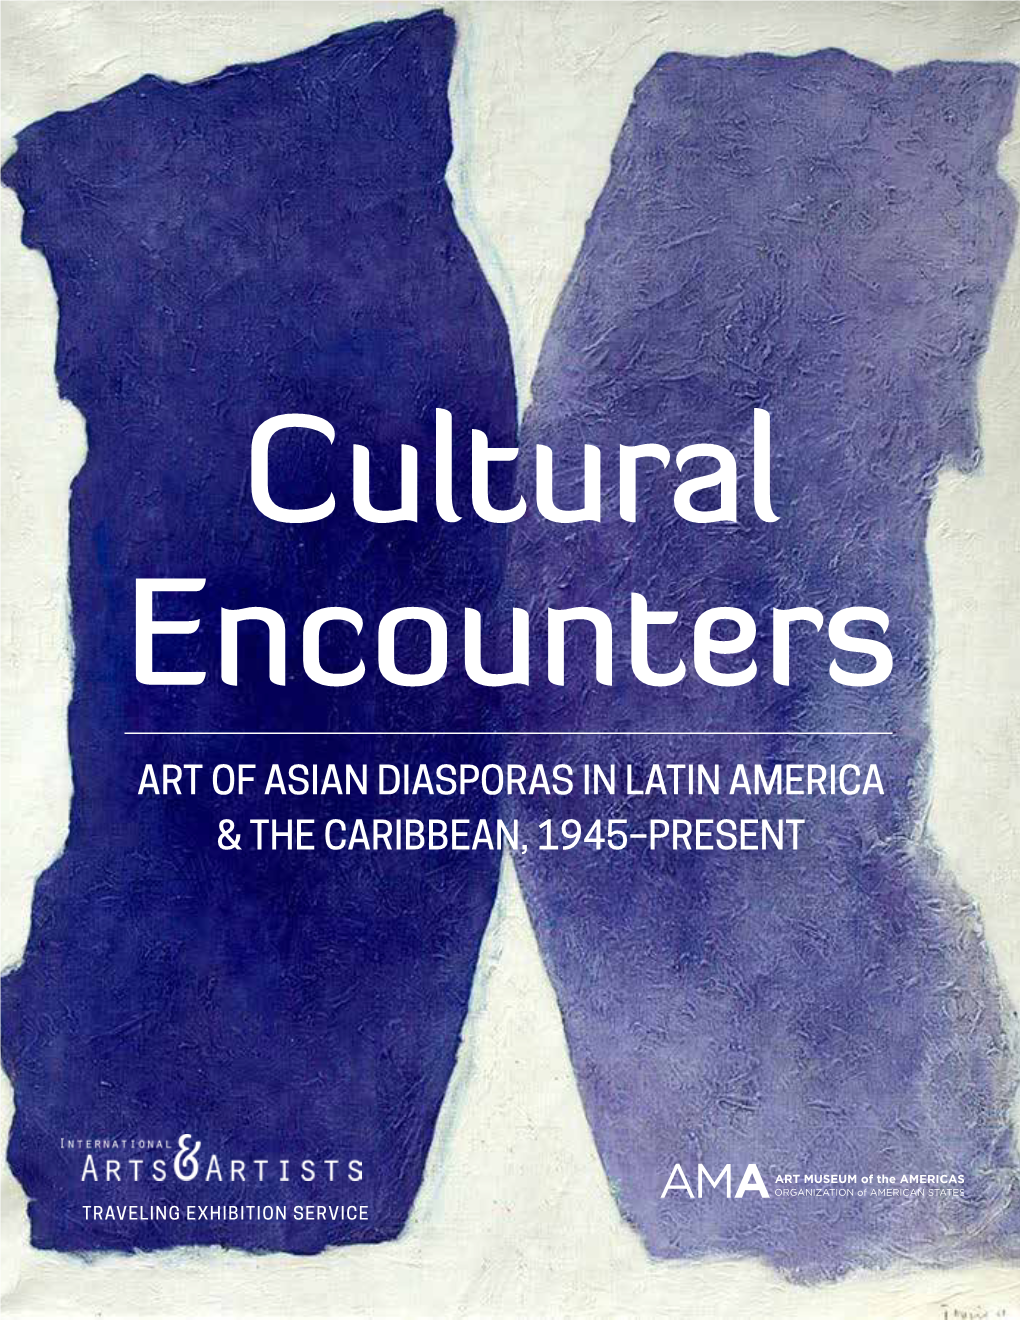 Art of Asian Diasporas in Latin America & the Caribbean